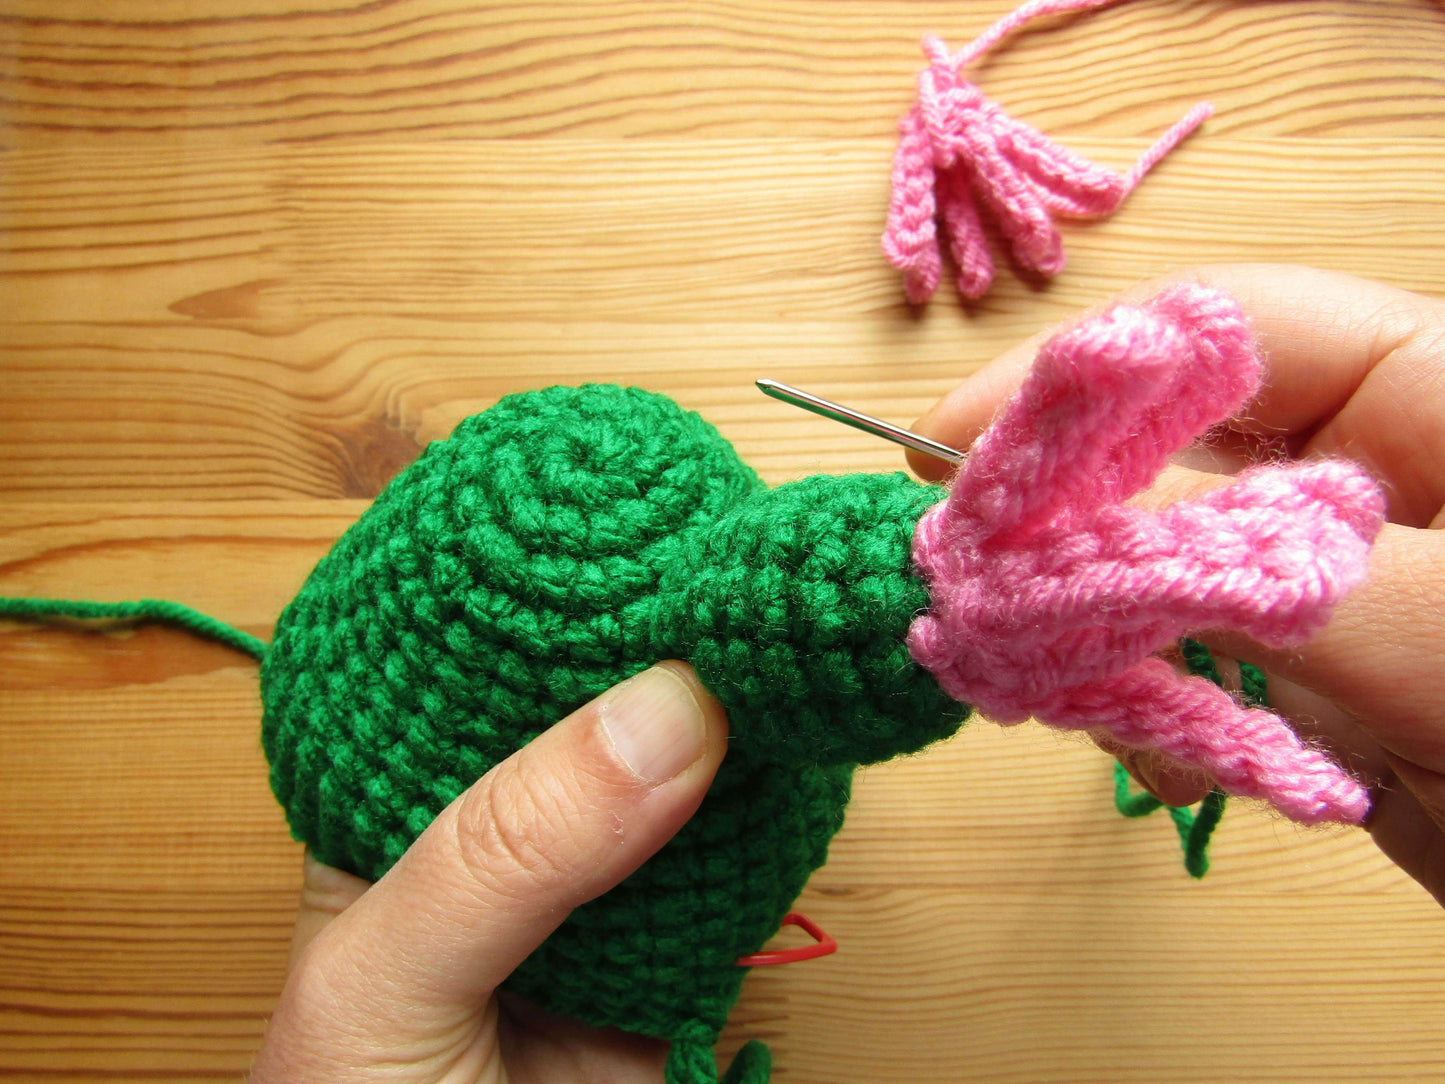 Tenguerengue Art & Craft Kits Crochet Kit : Cactus